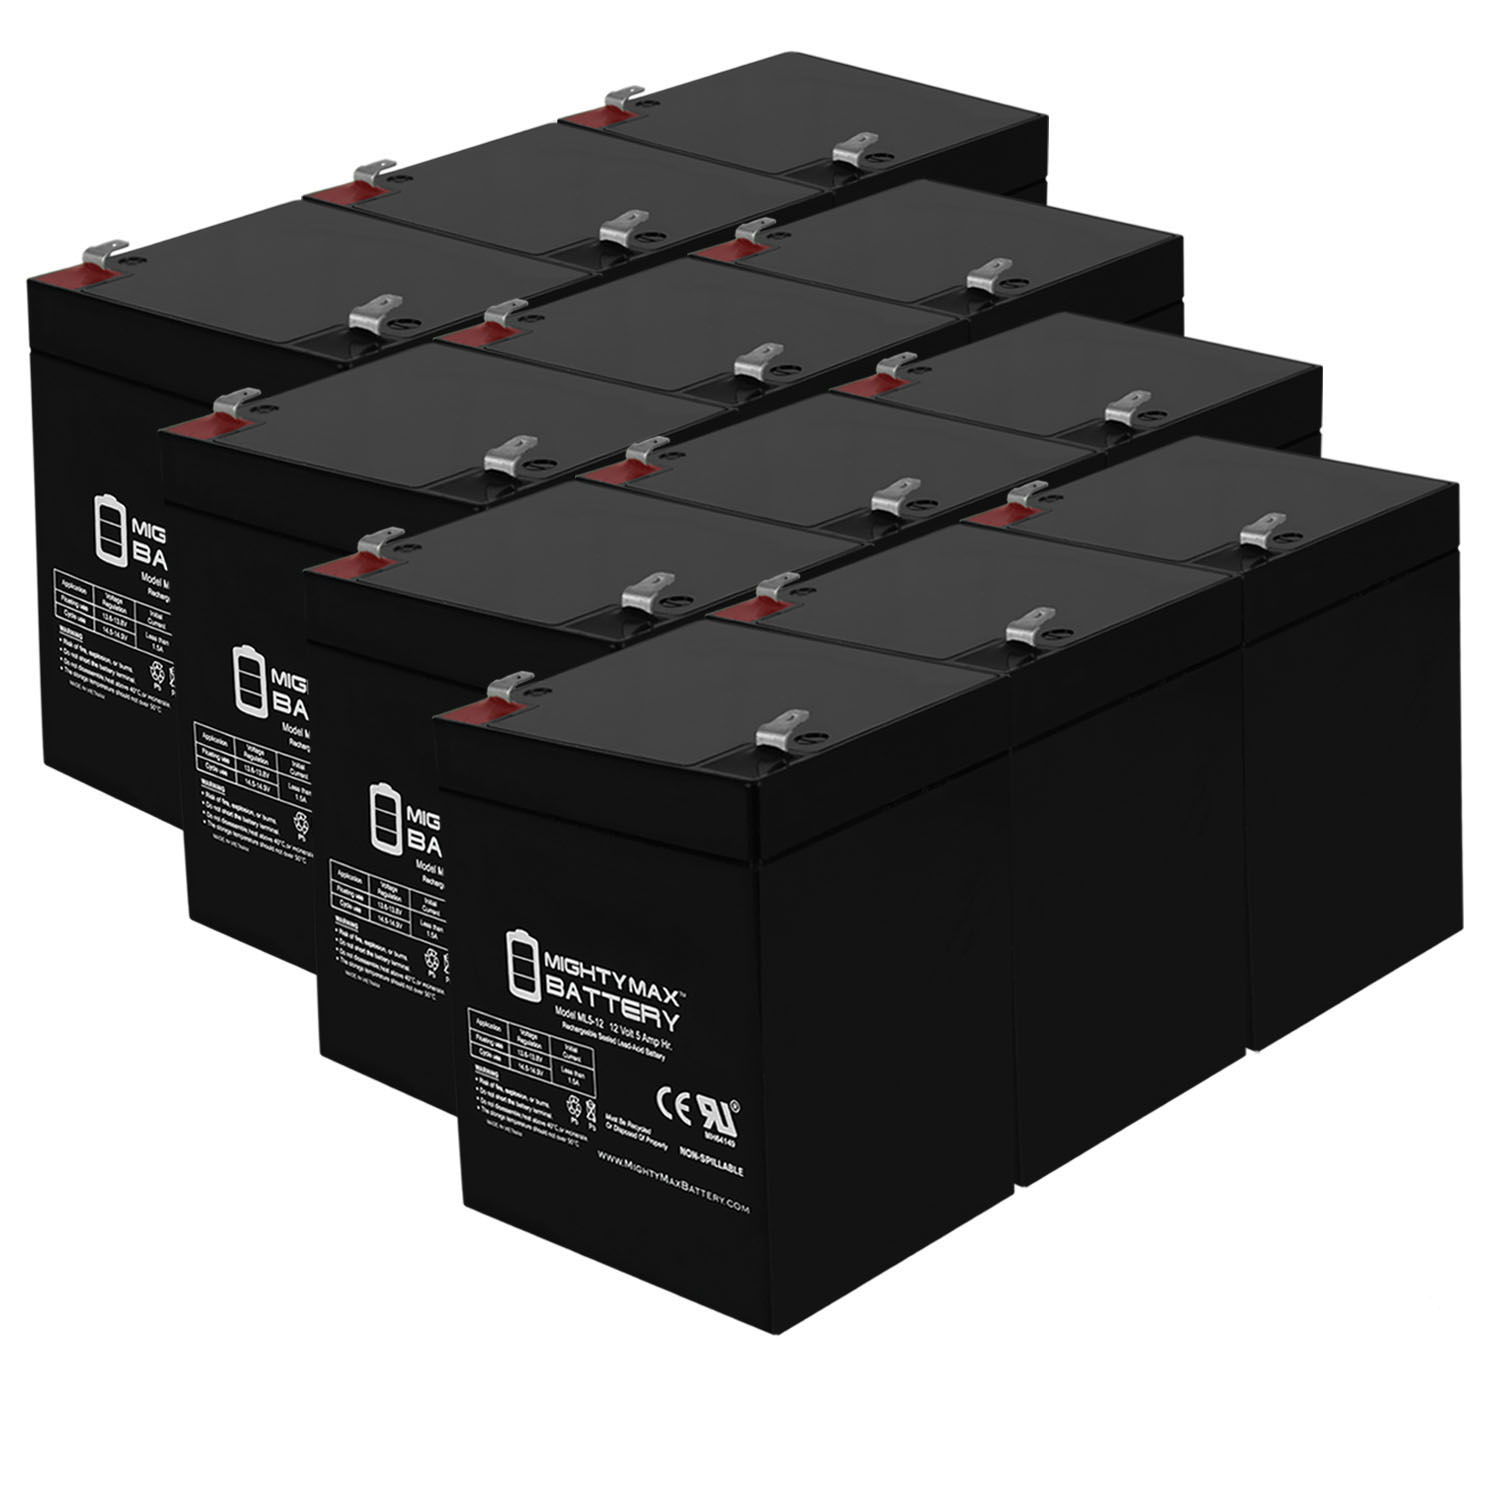 12V 5AH SLA Replacement Battery for Razor E150 Red 13111601 - 12 Pack